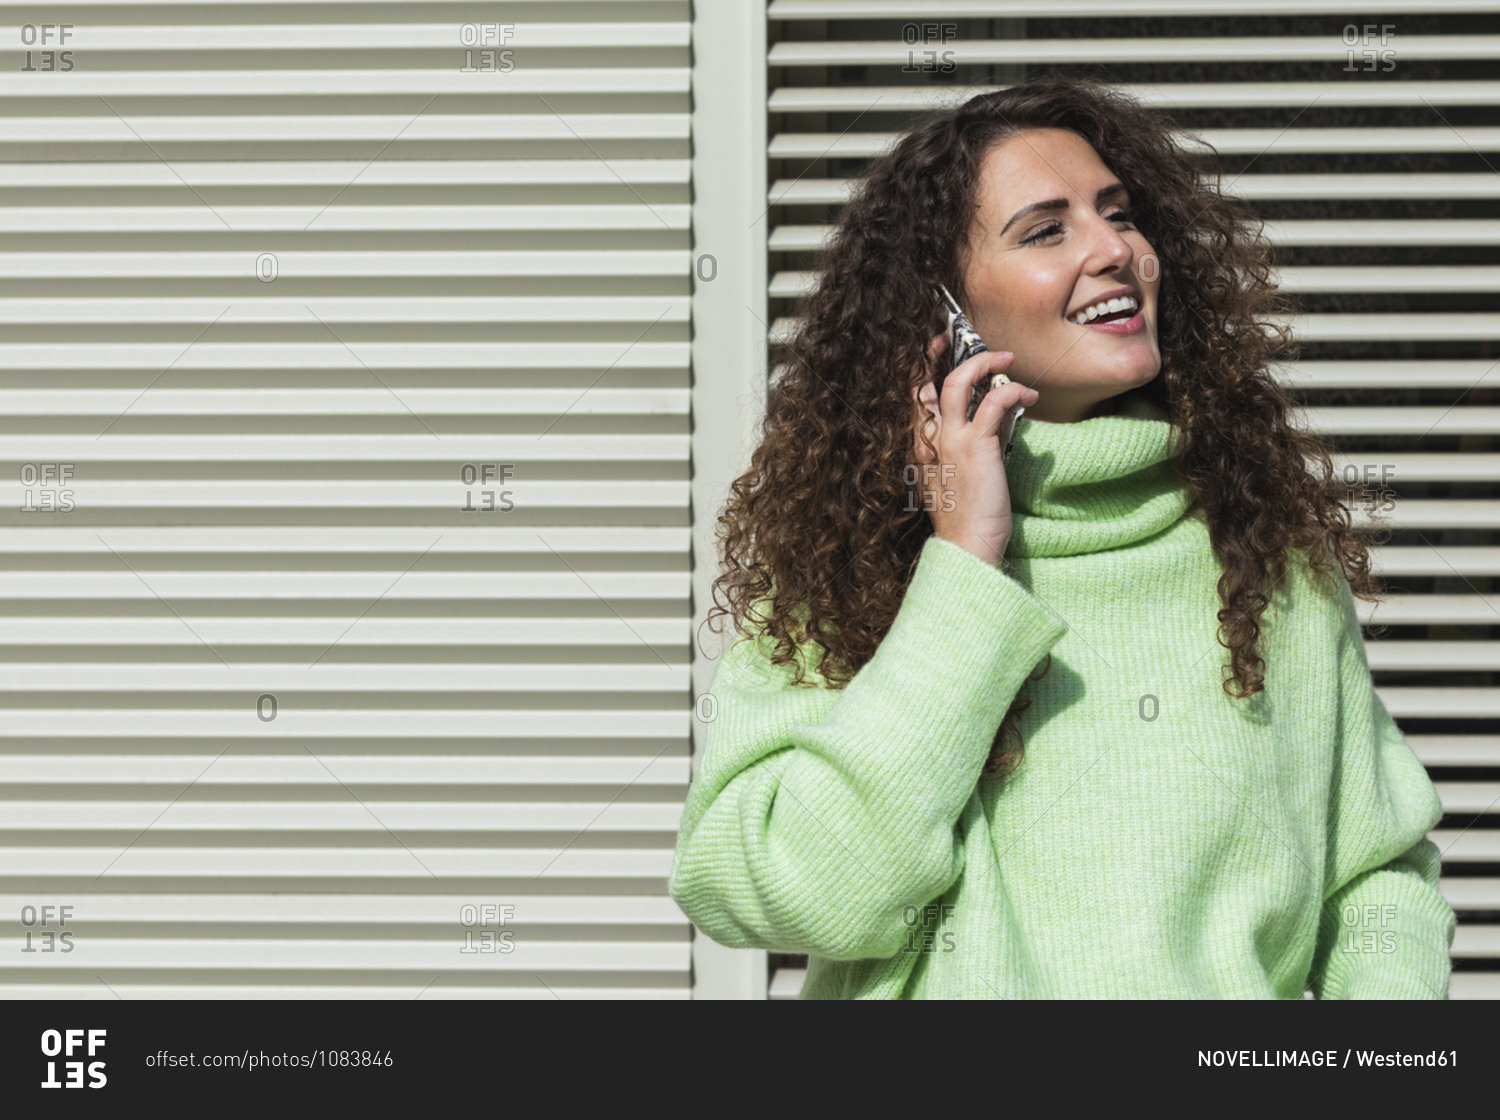 Smiling woman in neon green sweater talking on mobile phone against metallic door